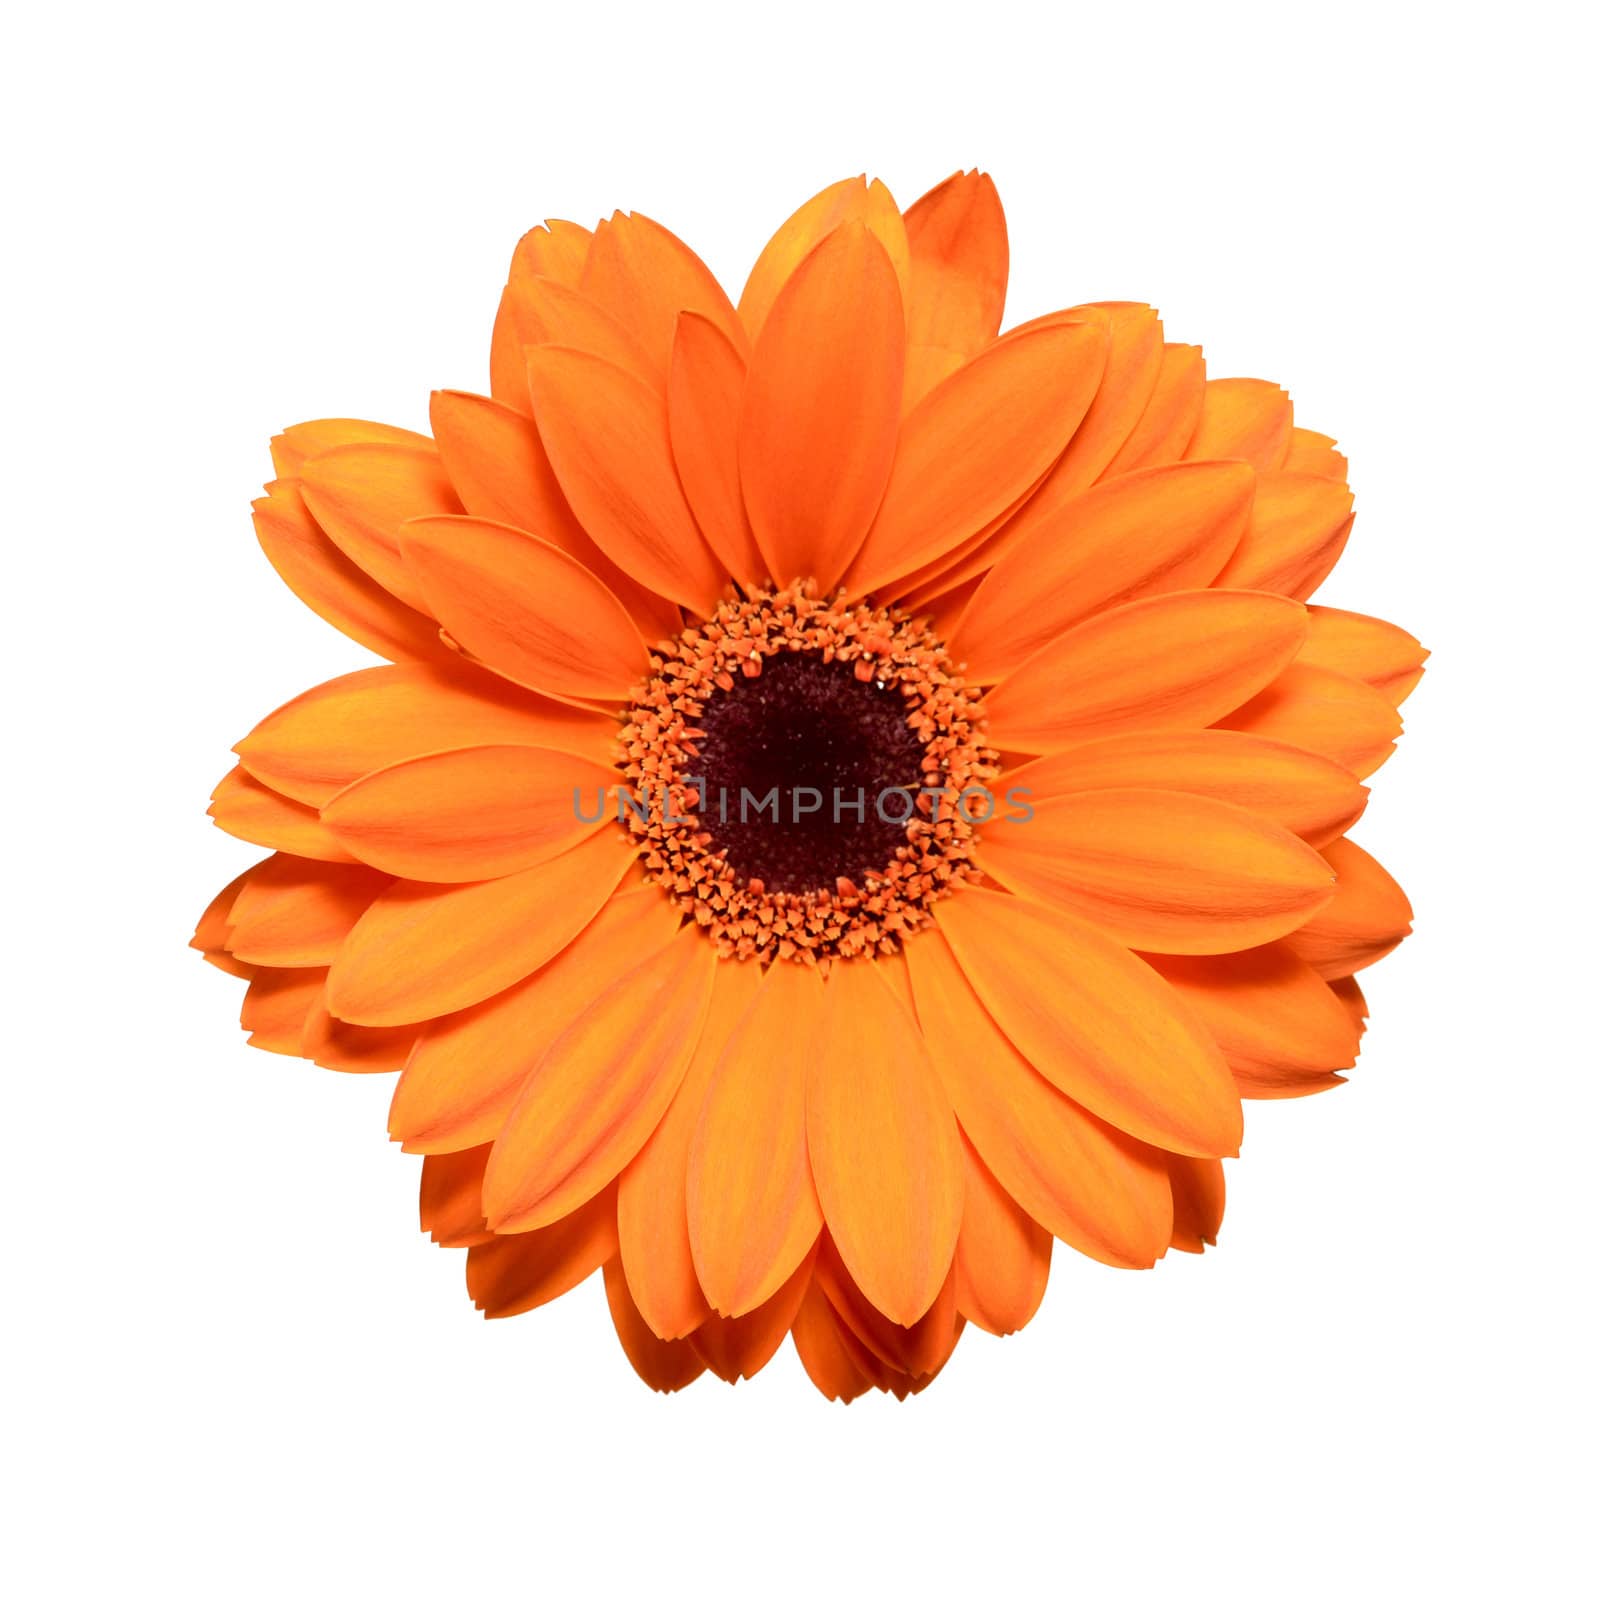 Orange gerbera flower isolated on white background by DNKSTUDIO